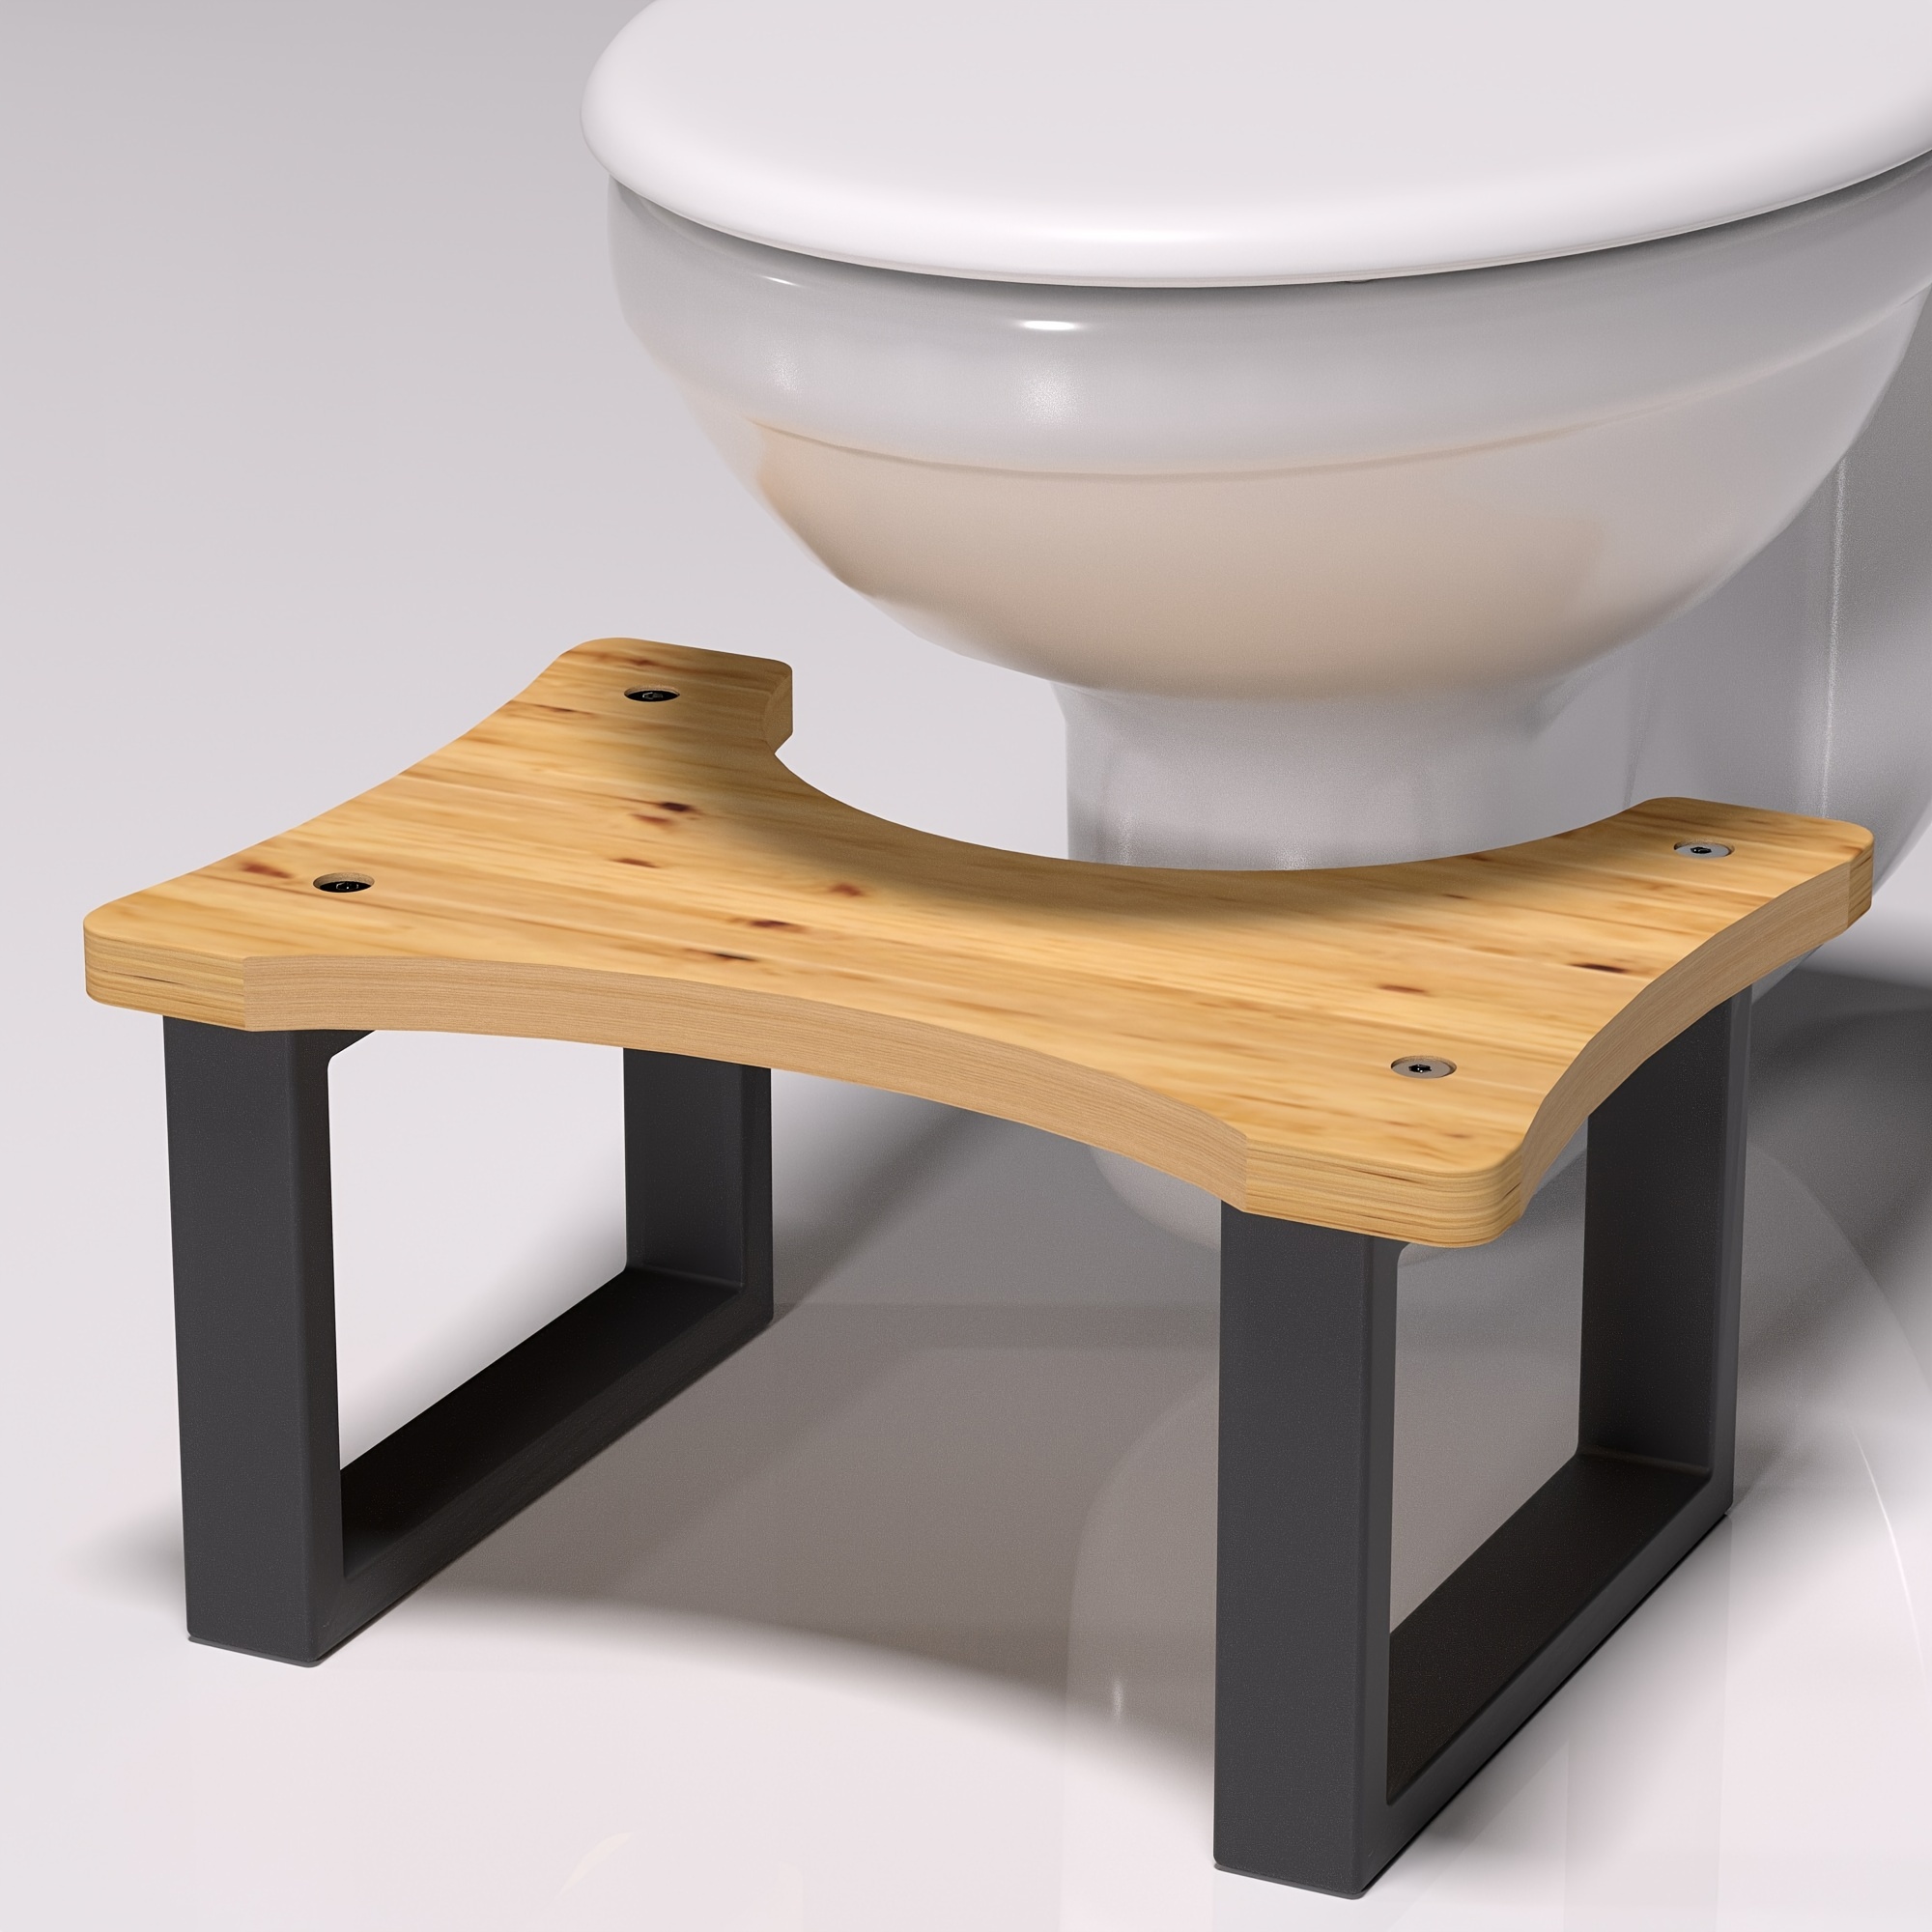 Toilet Stool, Diy Toilet Stool, Squatty Potty, Poop Stool, Diy Squatty Potty,  Diy Poop Stool, Bathroom Toilet Stool, Bathroom Improvement 